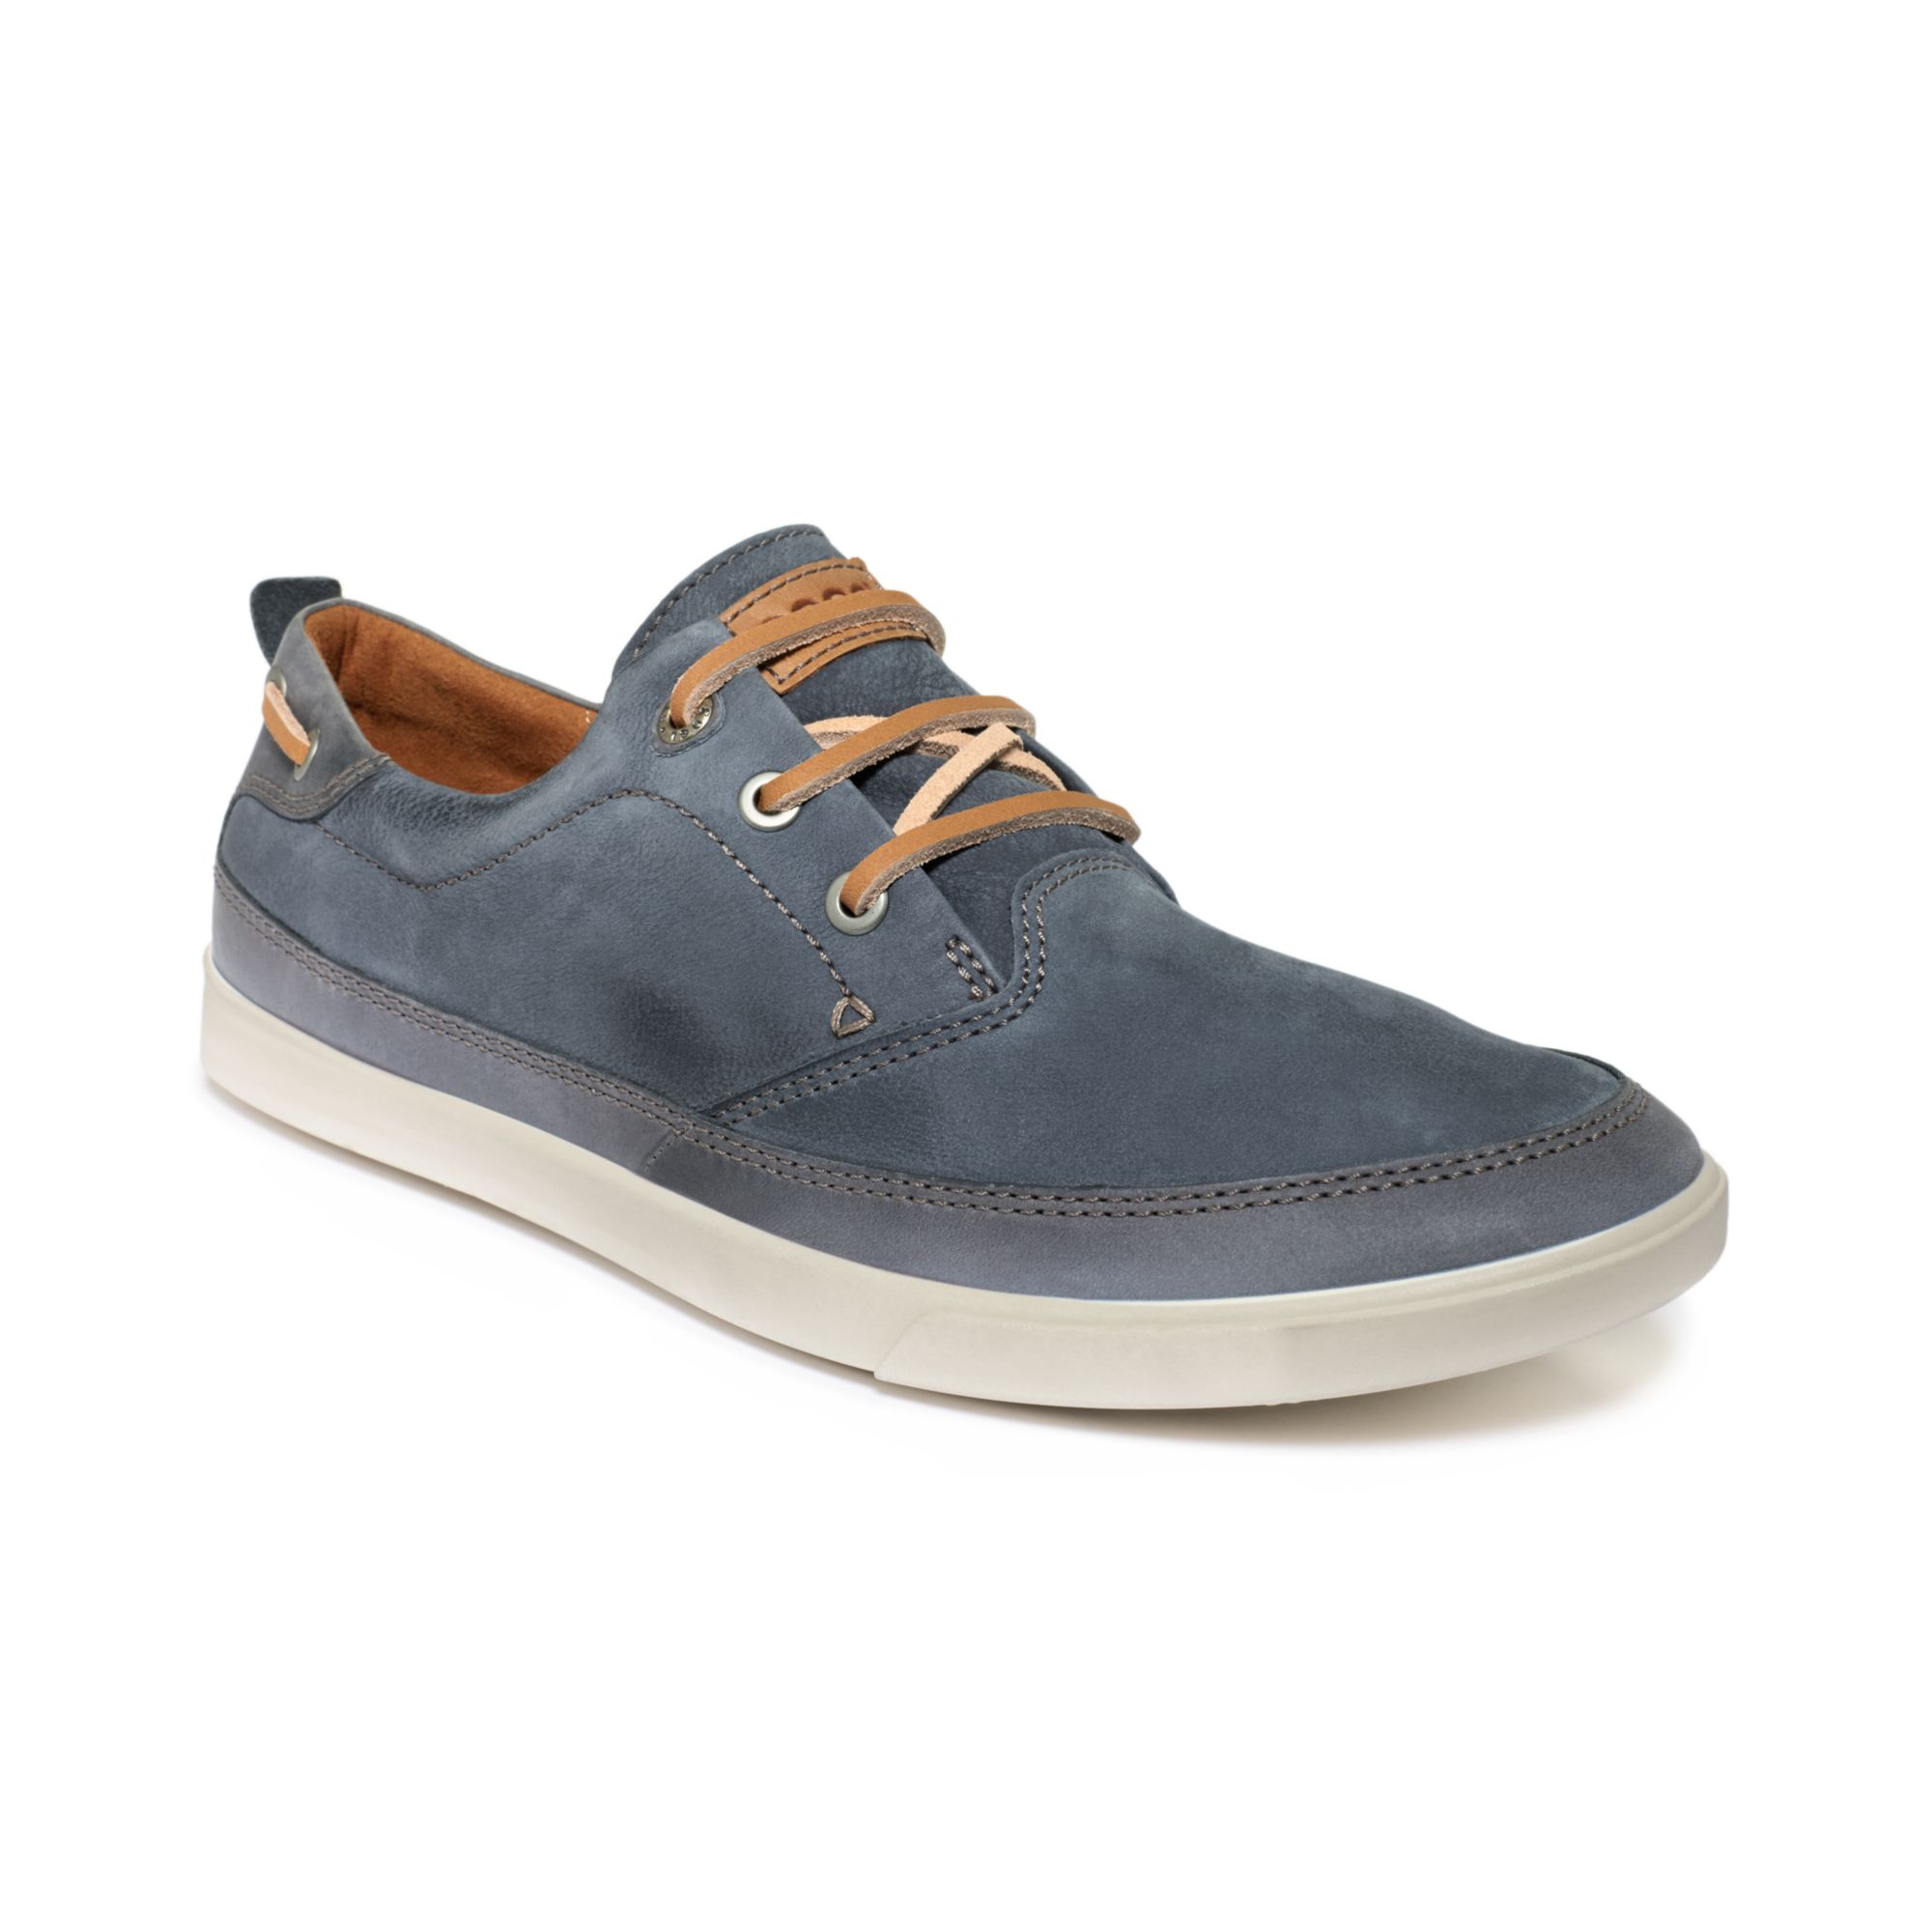 Ecco Collin Nautical Sneakers in Blue for Men - Lyst